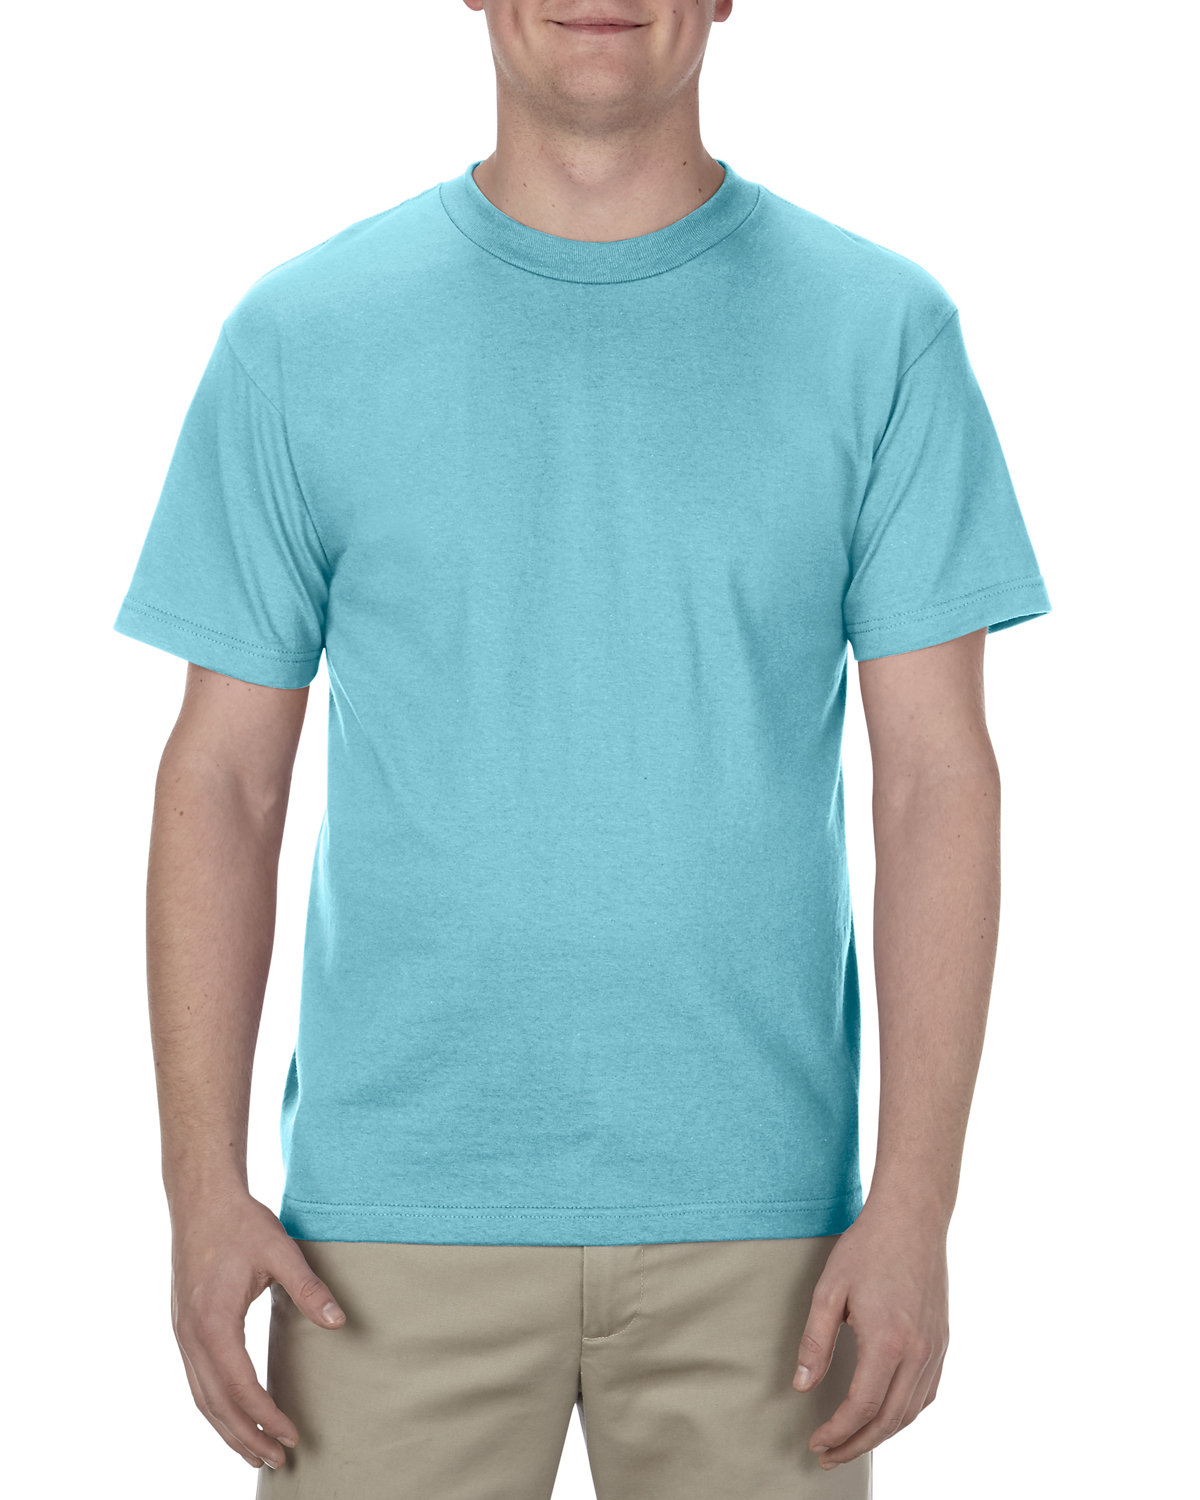 American Apparel Adult 6.0 oz., 100% Cotton T-Shirt PACIFIC BLUE 